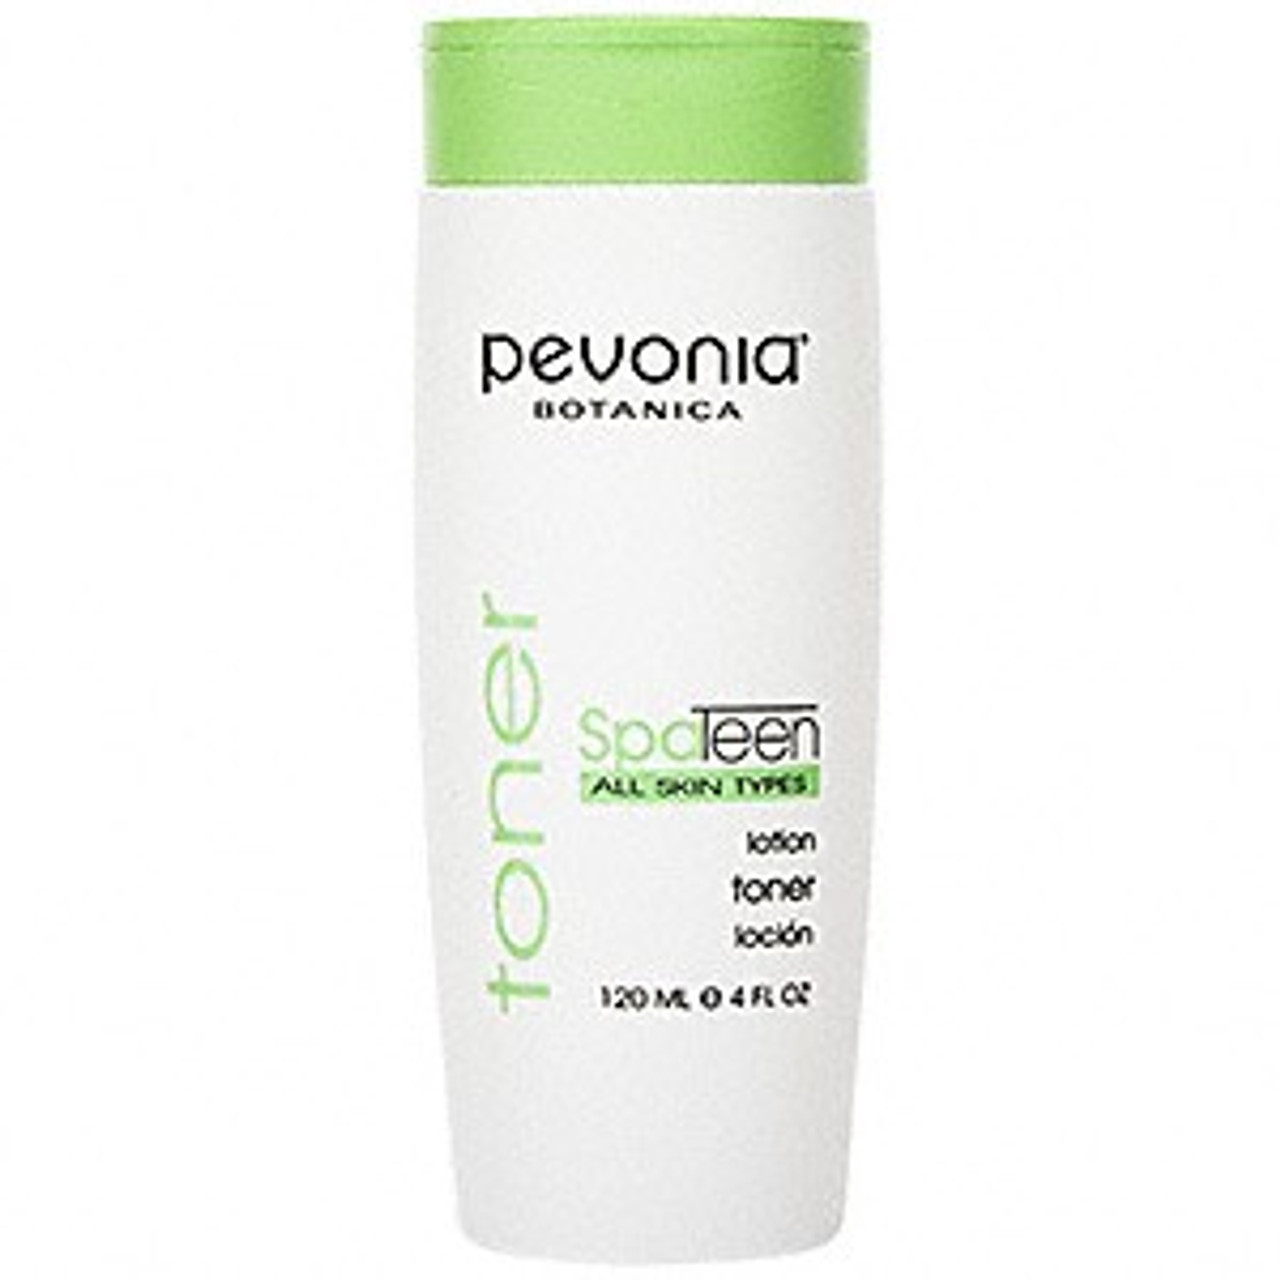 Pevonia Botanica SpaTeen All Skin Types Toner, 4 oz (120 ml)